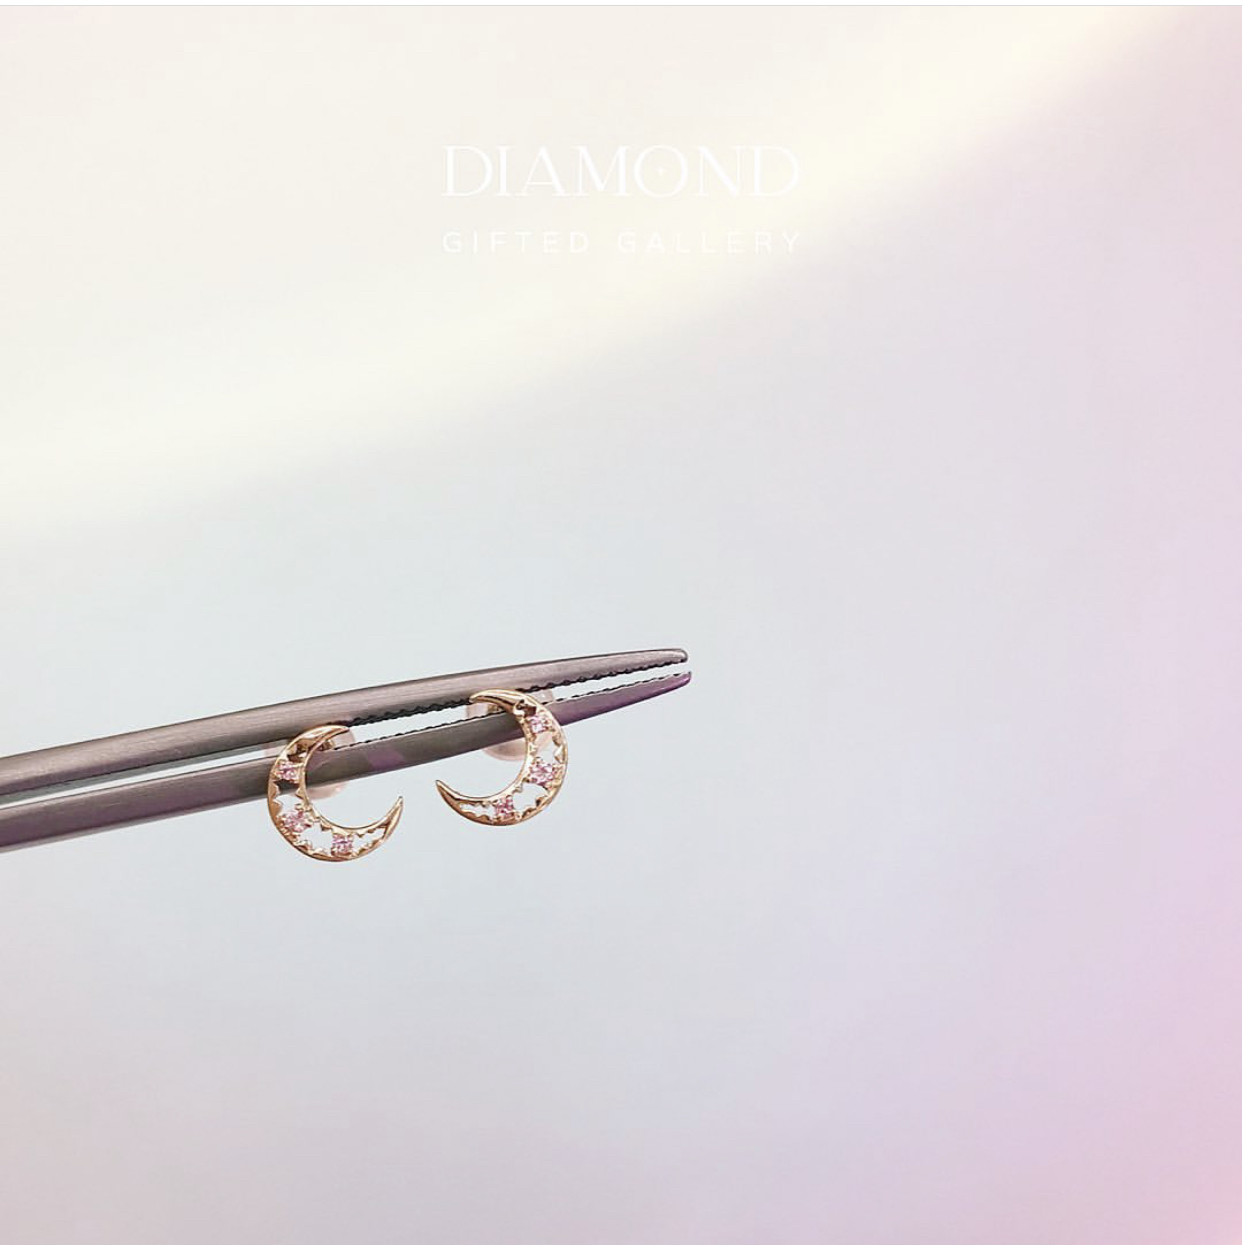 Bespoke＊Moon Diamond Earring By Gifted Gallery